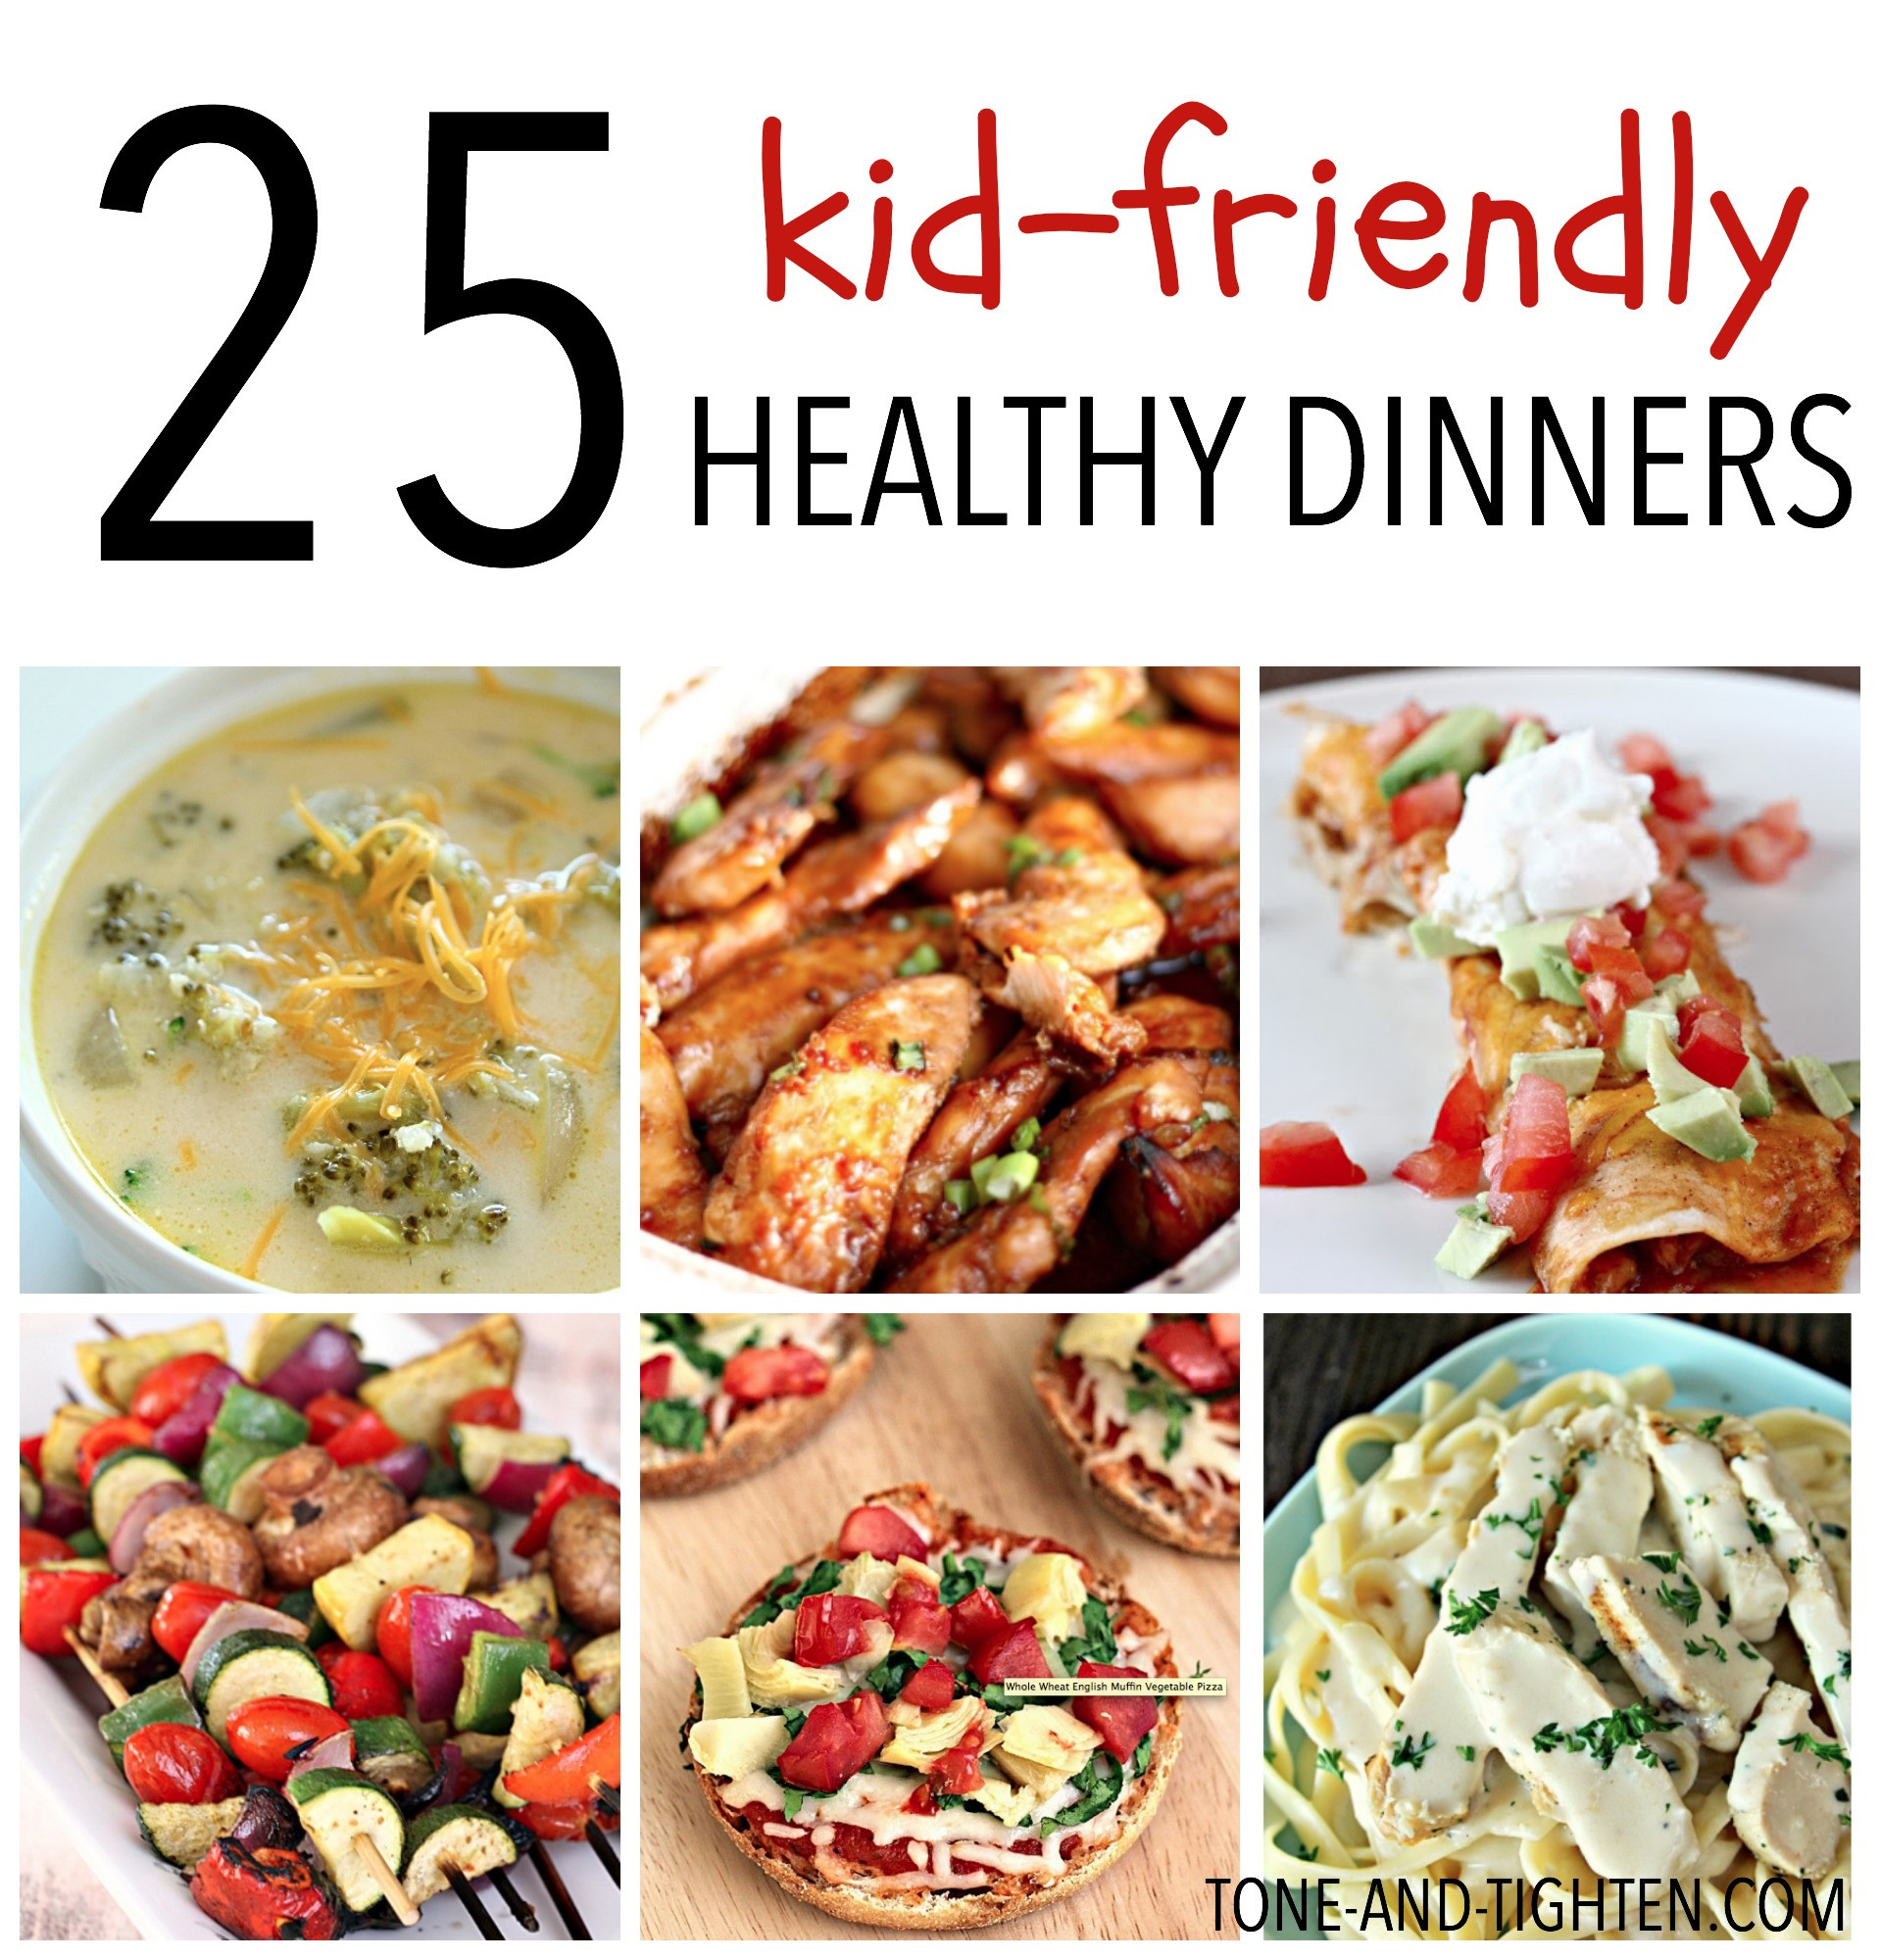 Kid Friendly Healthy Dinner Recipes
 25 Kid Friendly Healthy Dinners